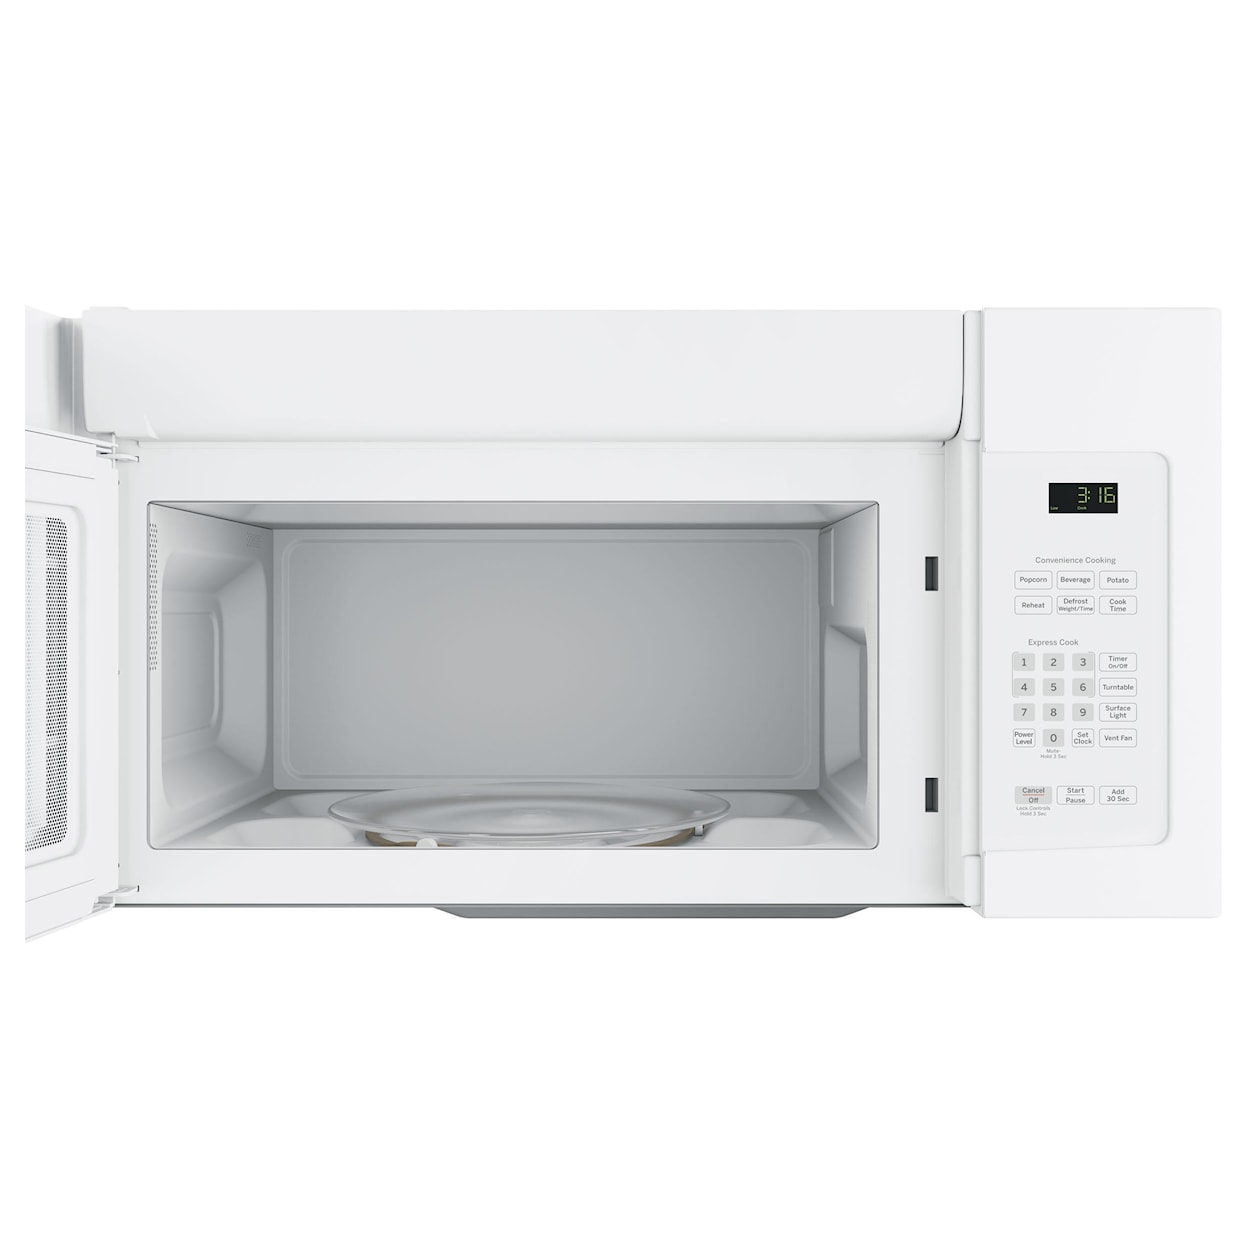 GE Appliances Microwave Over The Range Microwave